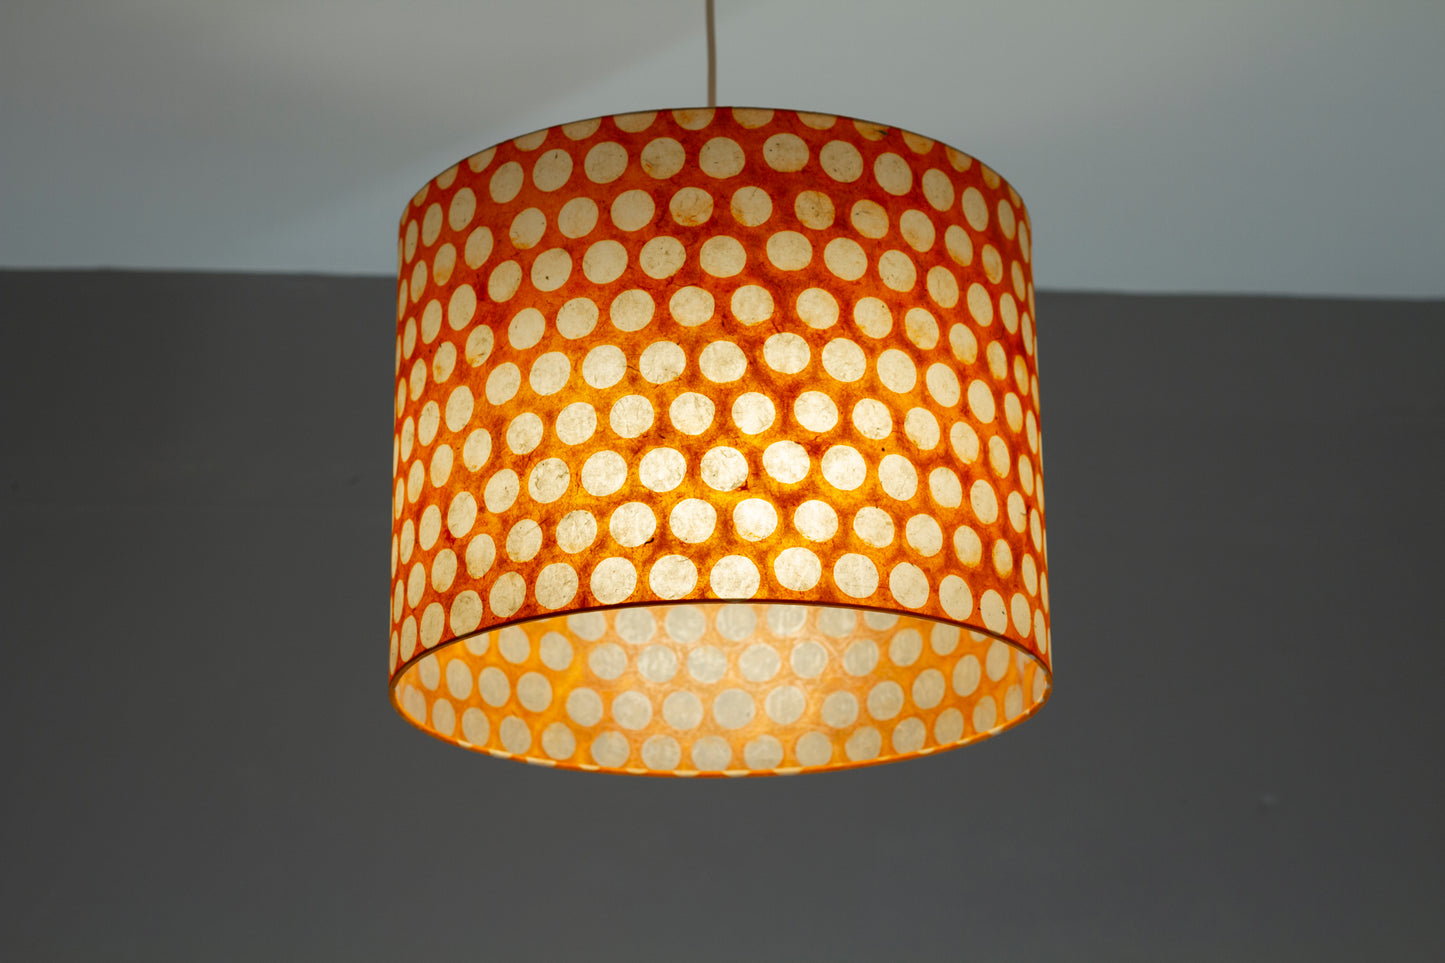 Drum Lamp Shade - B110 ~ Batik Dots on Orange, 60cm(d) x 30cm(h)